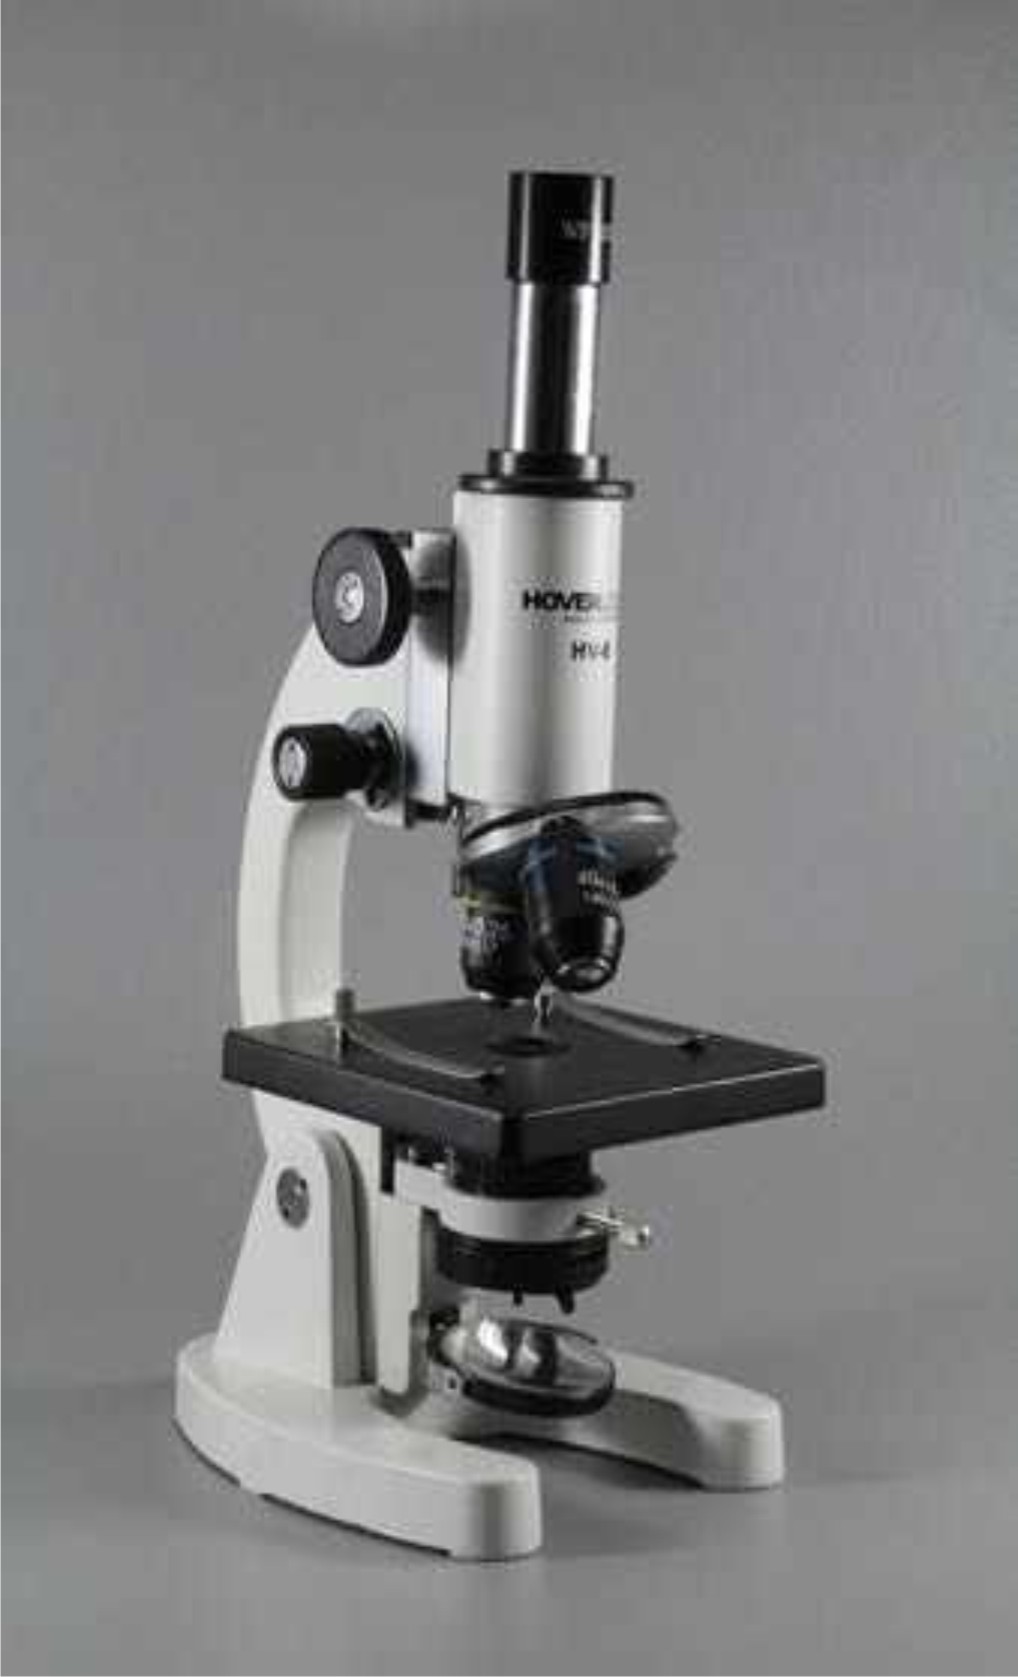  Student Microscope With Movable Condenser, Model No.: KI - 2240 - MC